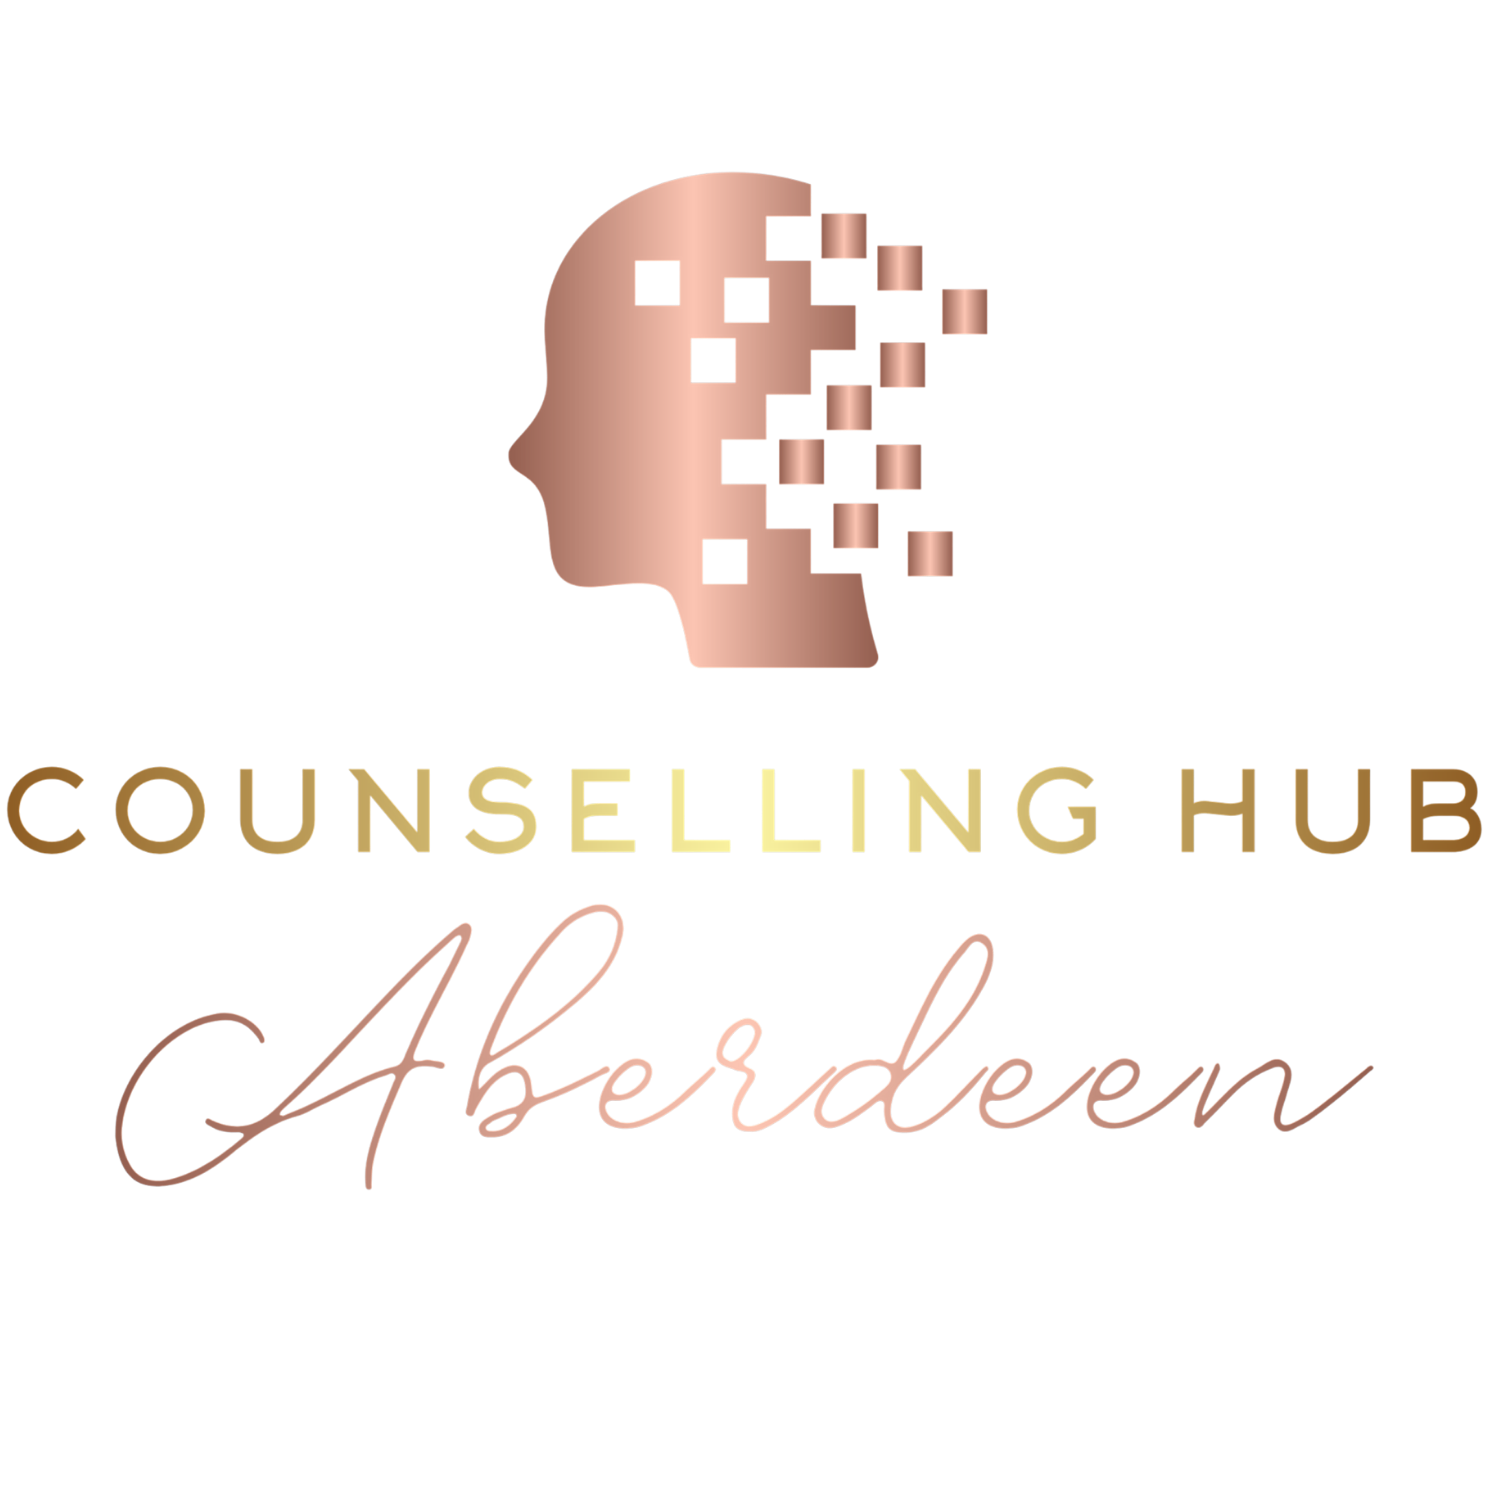 Counselling Hub Aberdeen